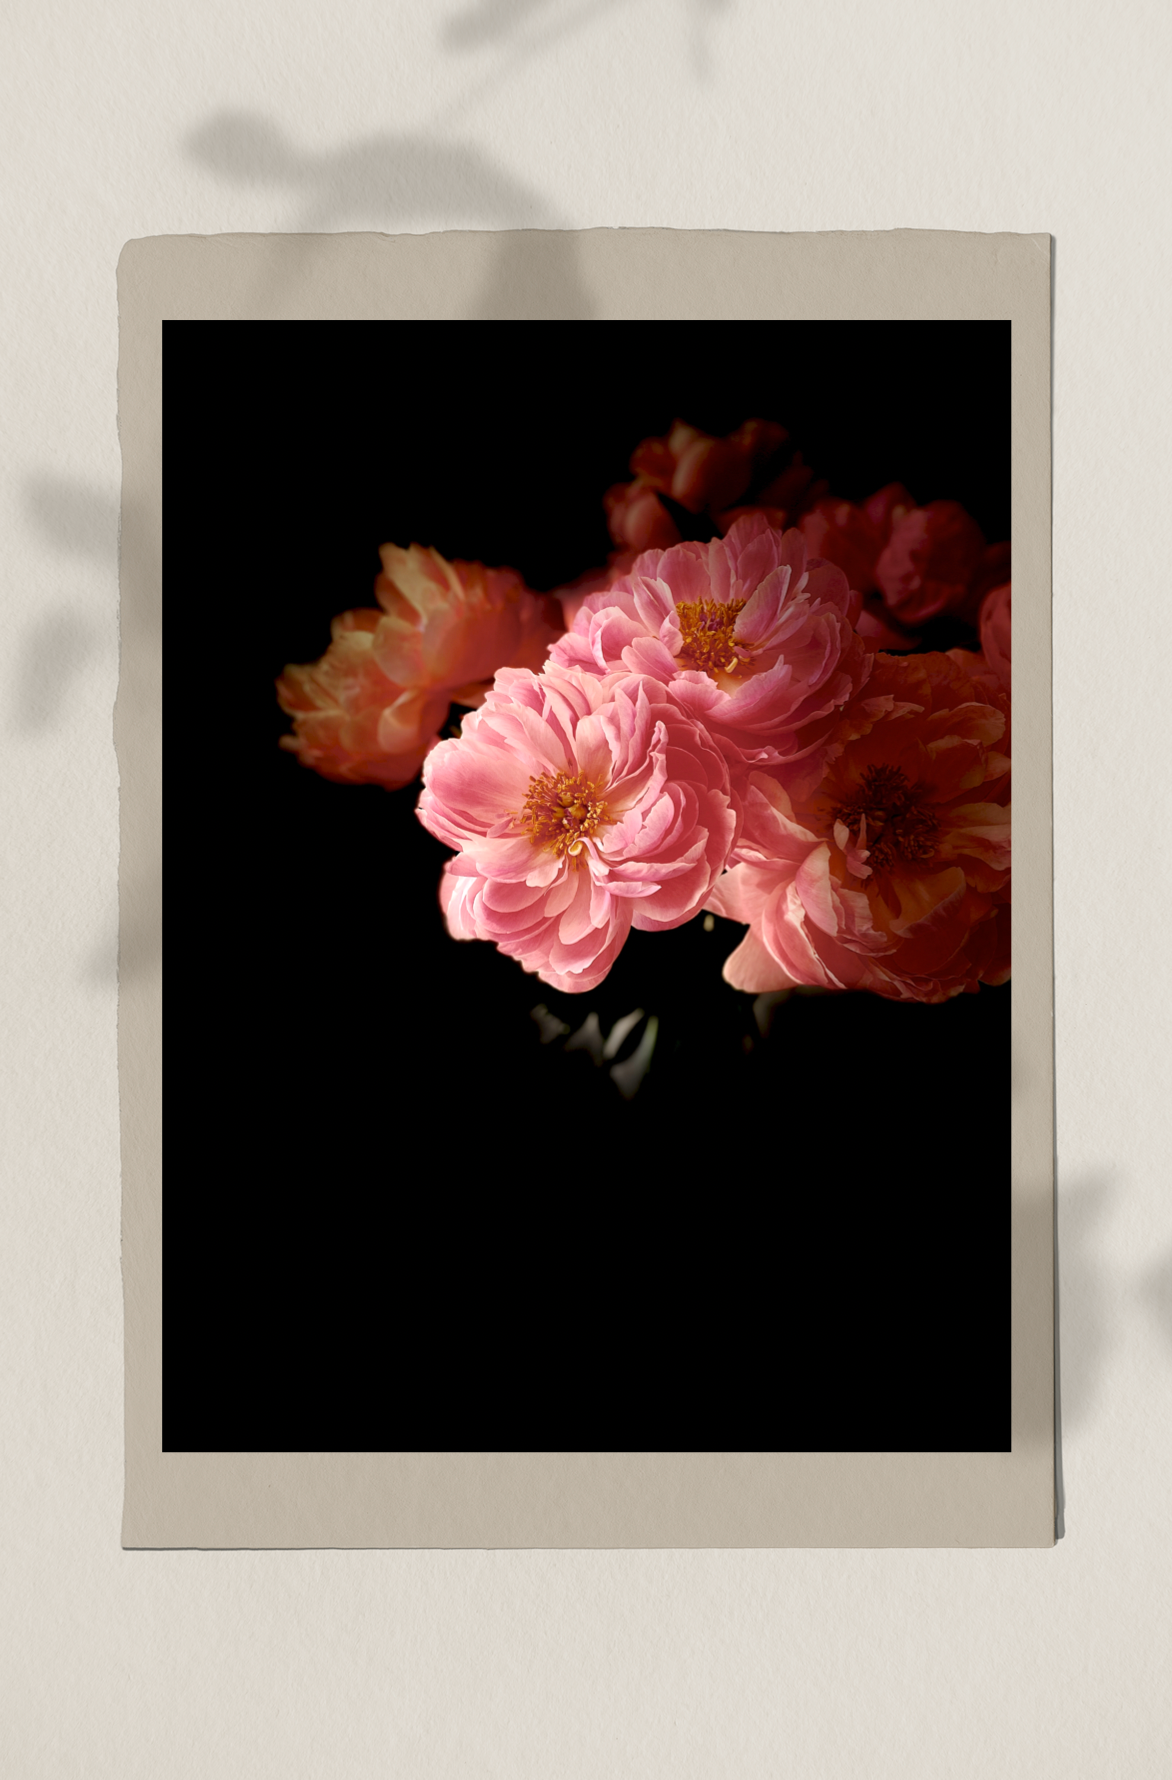 Florette • Nº 4 Florescence Collection • Peony Flower Fine Art Photography